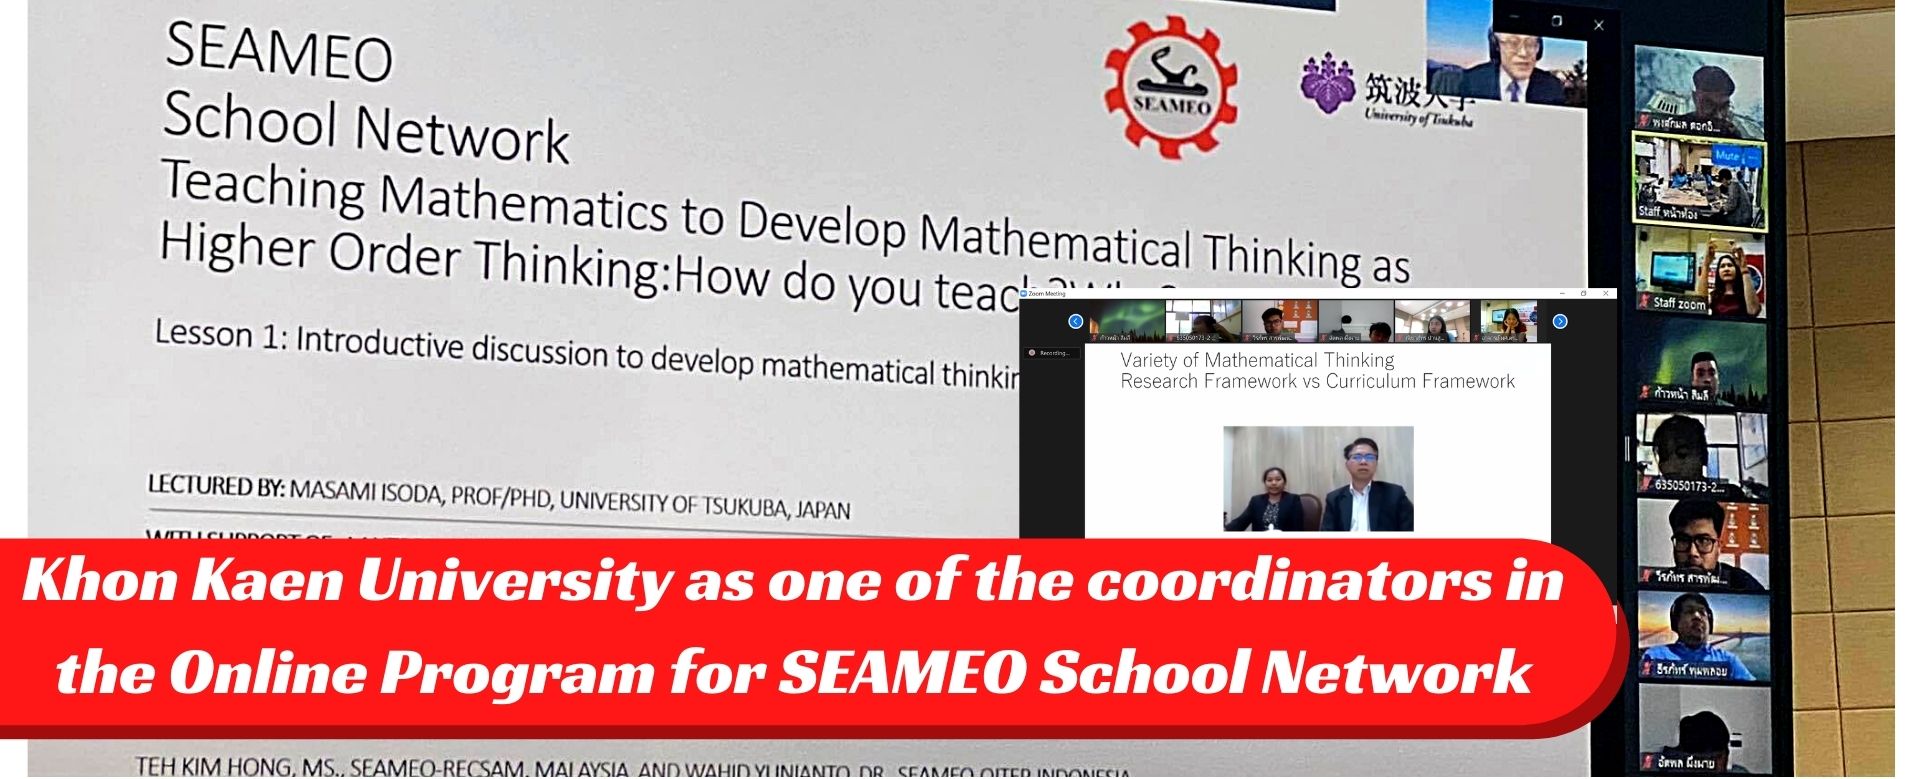 SEAMEO School Network